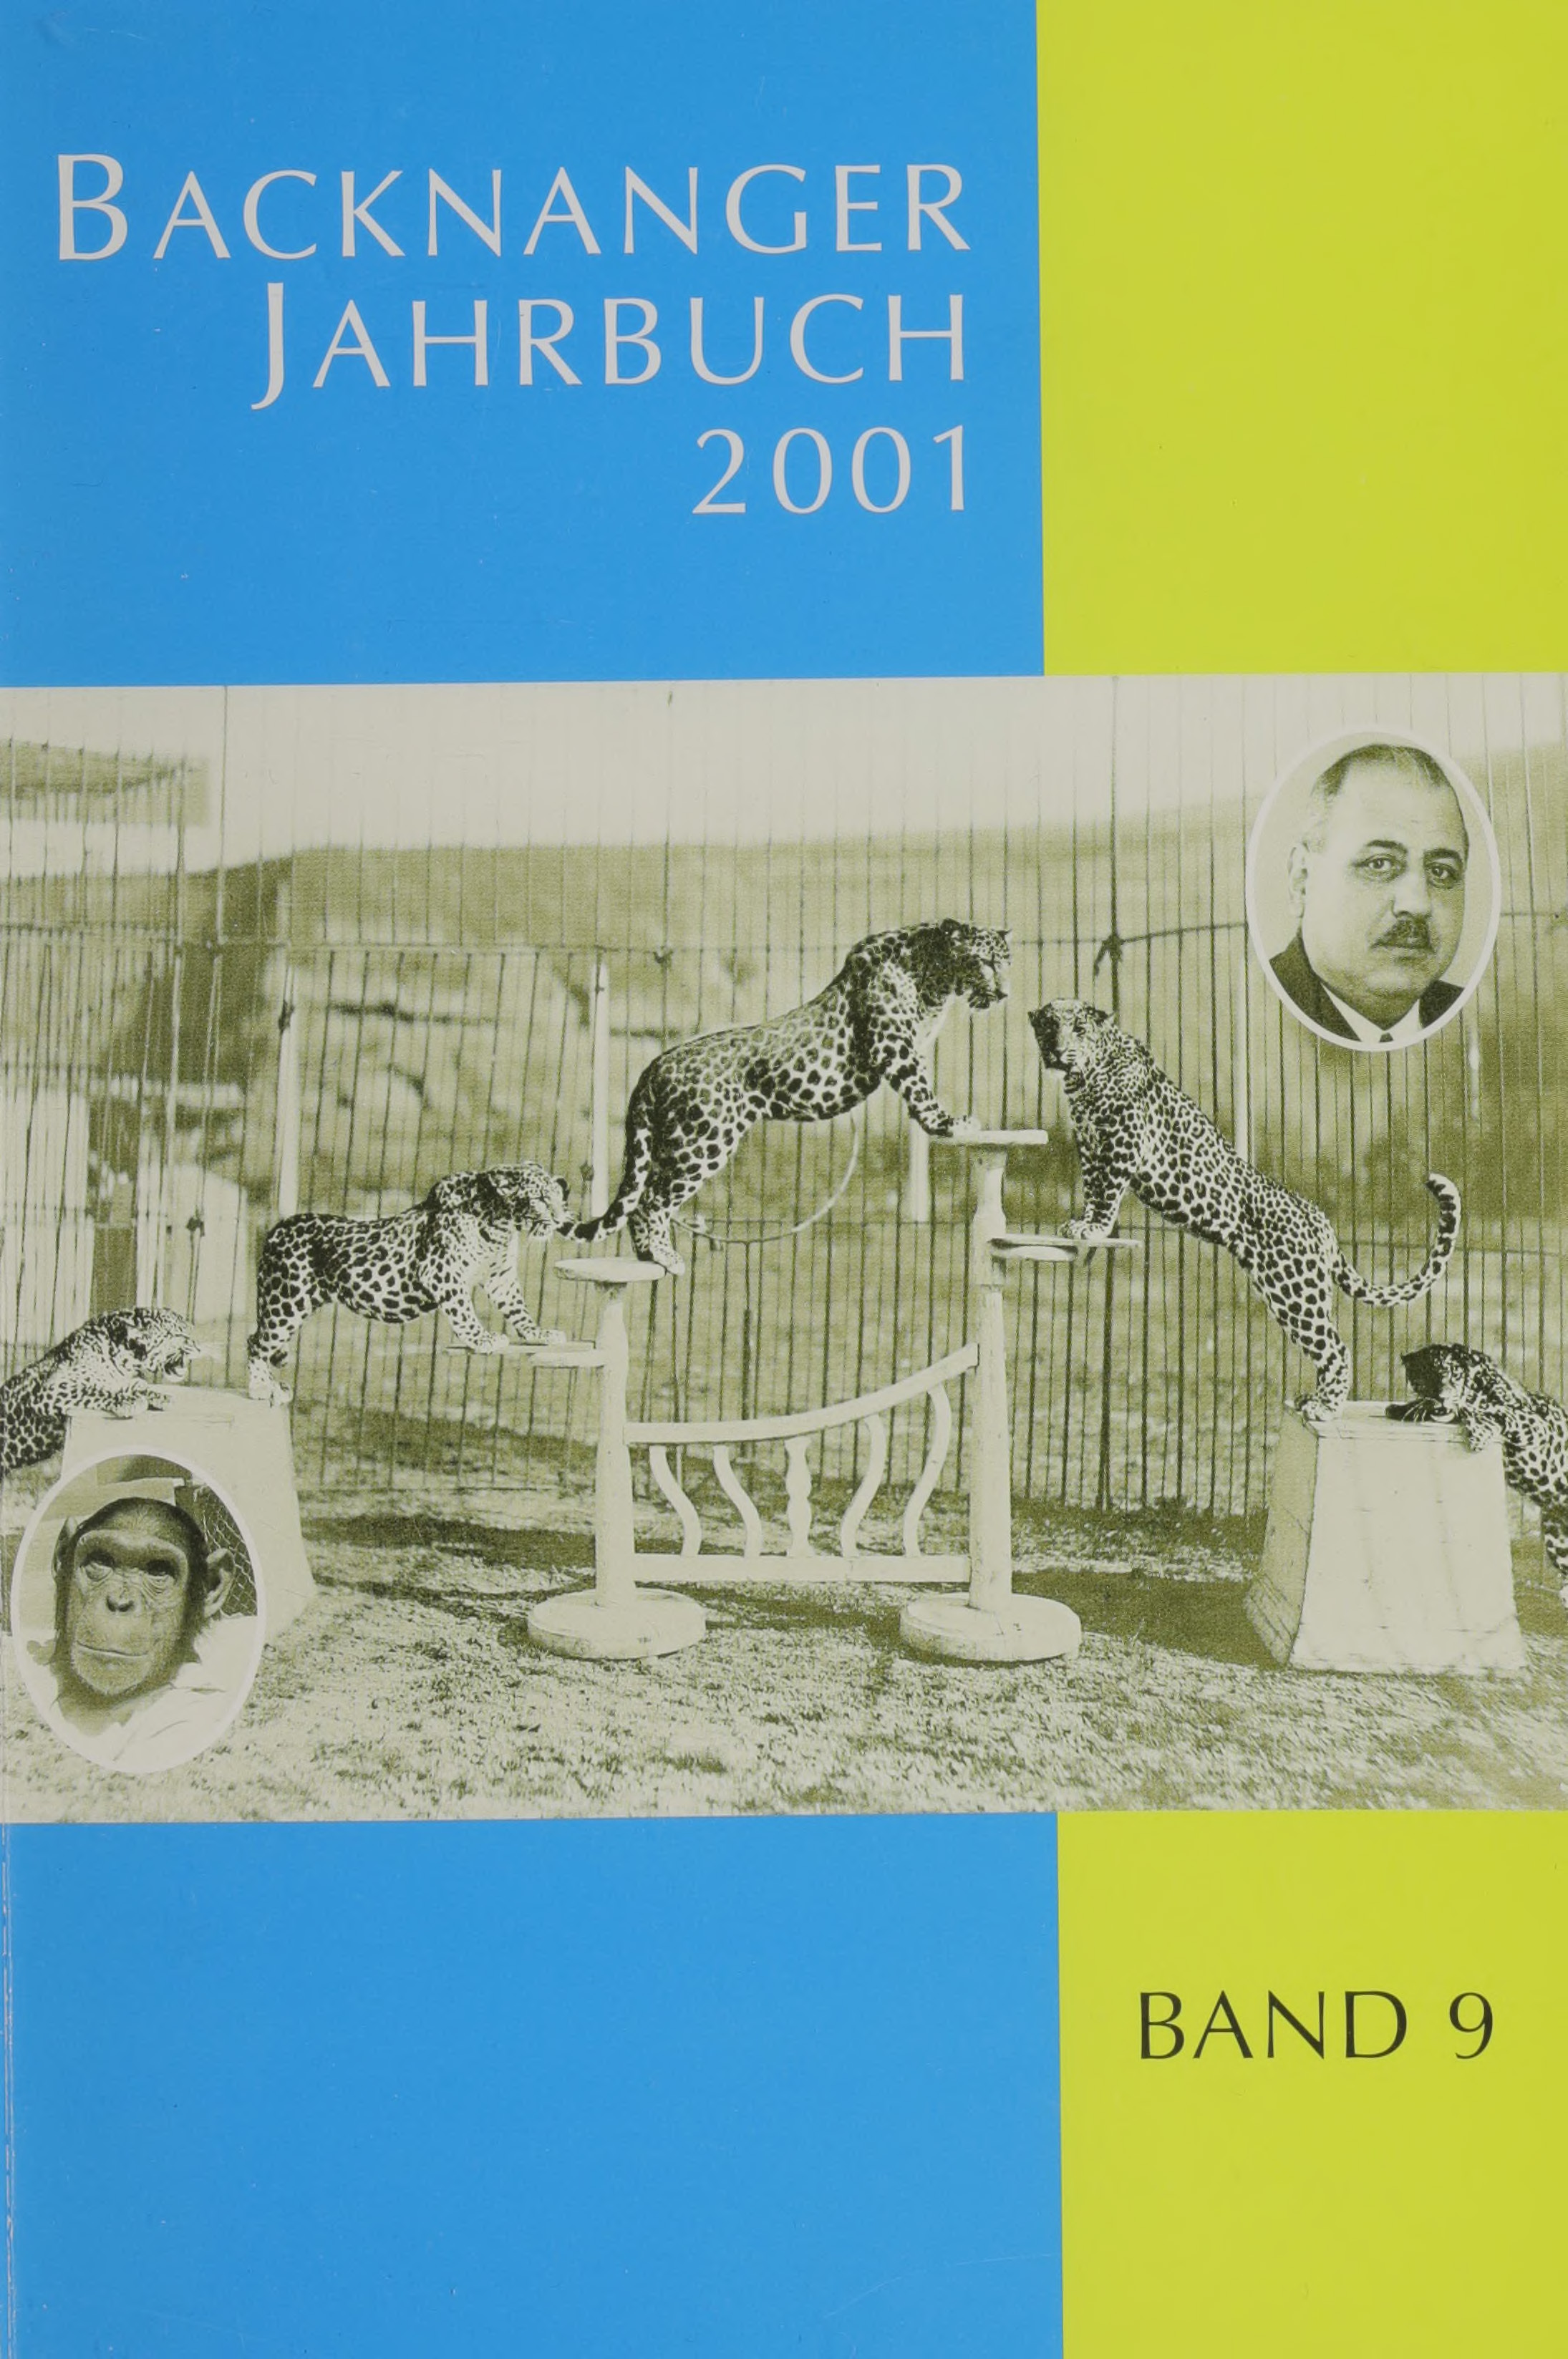                     Ansehen Bd. 9 (2001): Backnanger Jahrbuch
                